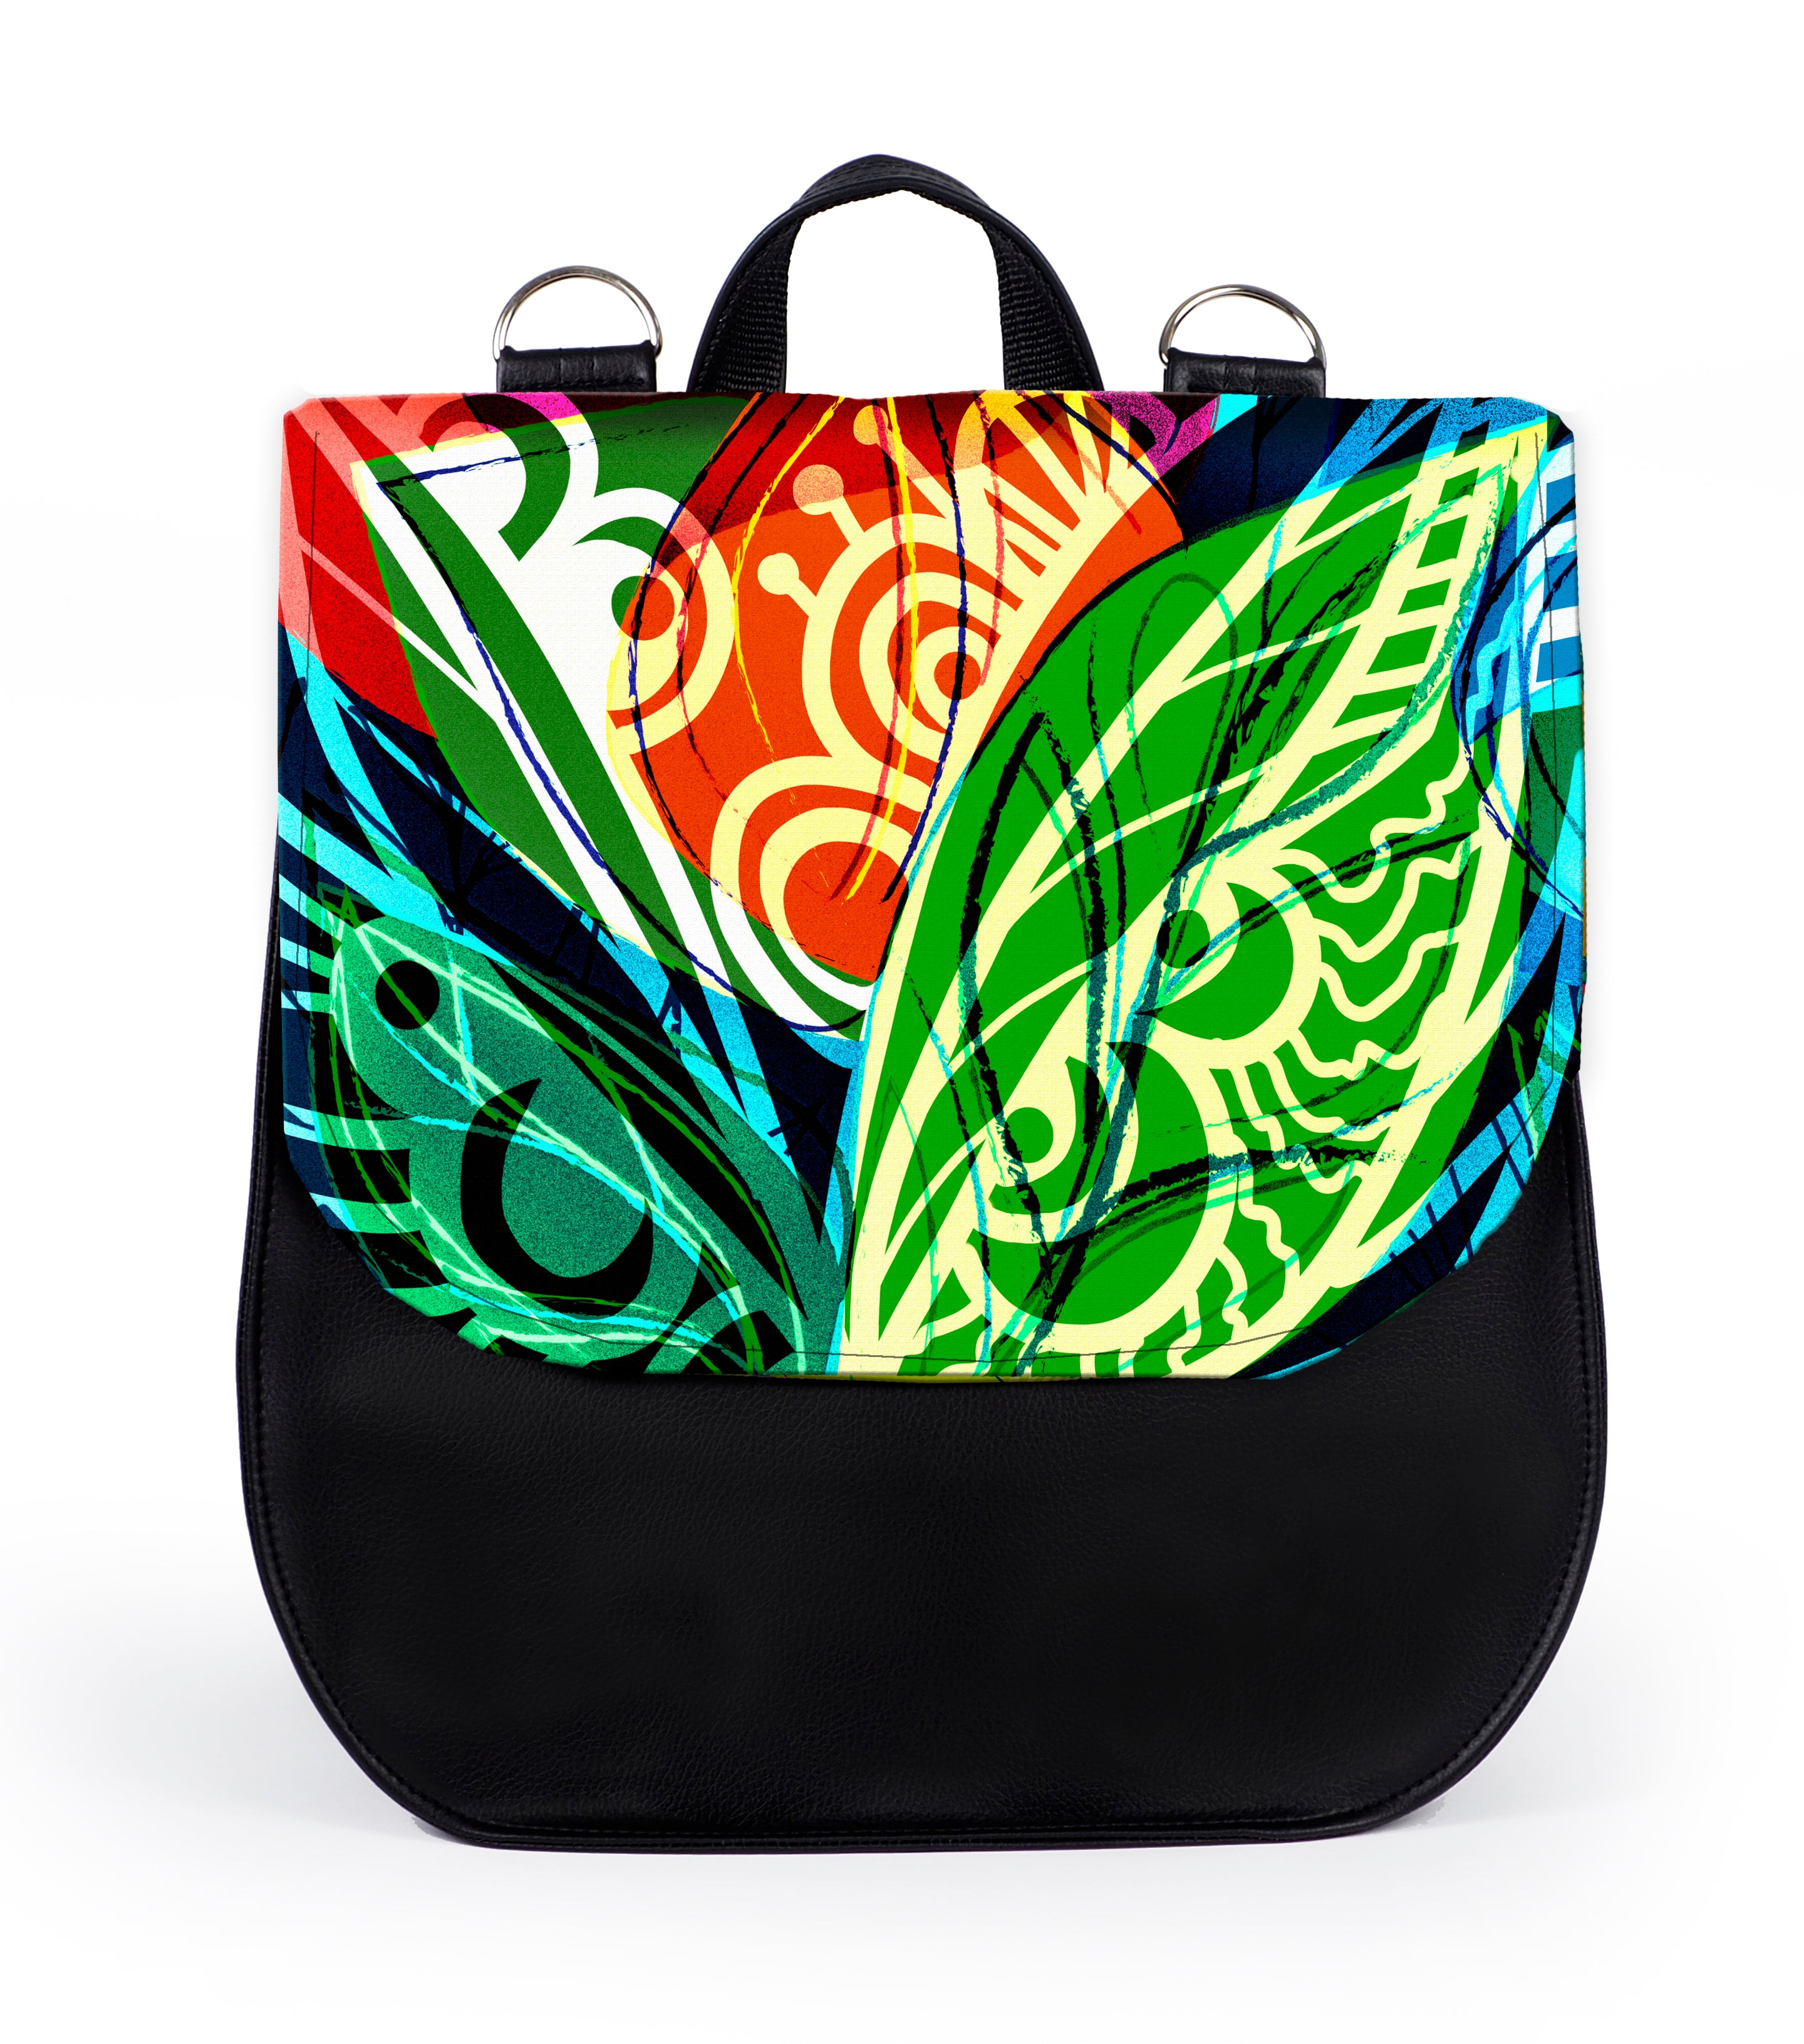 Bardo backpack&bag - Awakening - Premium bardo backpack&bag from BARDO ART WORKS - Just lvart bag, backpack, bag, black, floral, flowers, gift, green, handemade, messenger, nature, purple, red, urban style, vegan leather, woman85.00! Shop now at BARDO ART WORKS